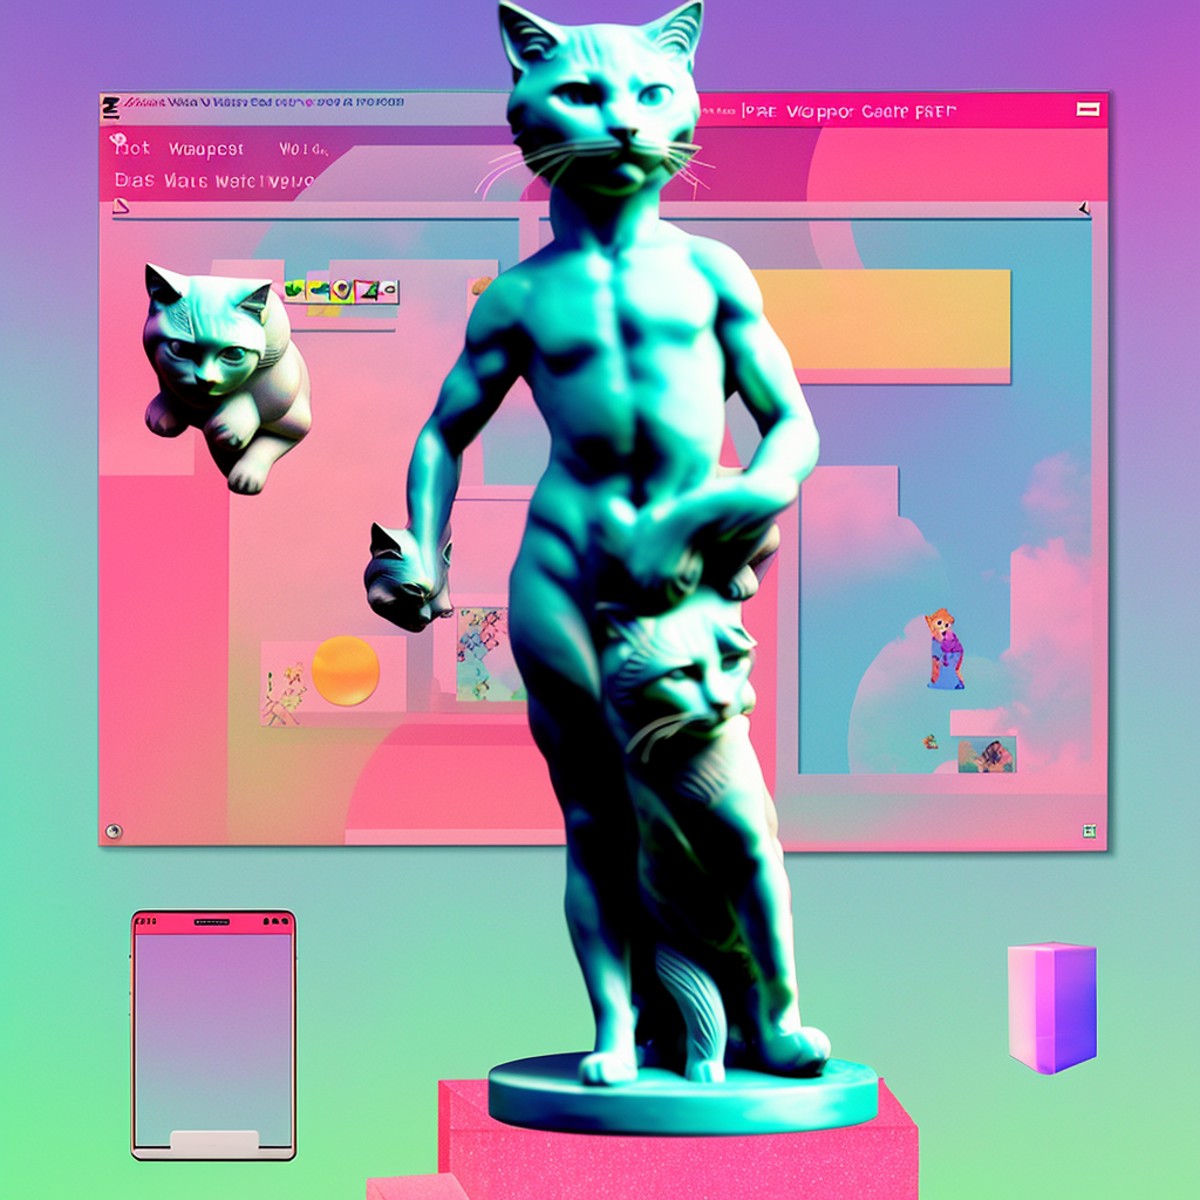 a vaporwave screenshot of a statue of a cute cat